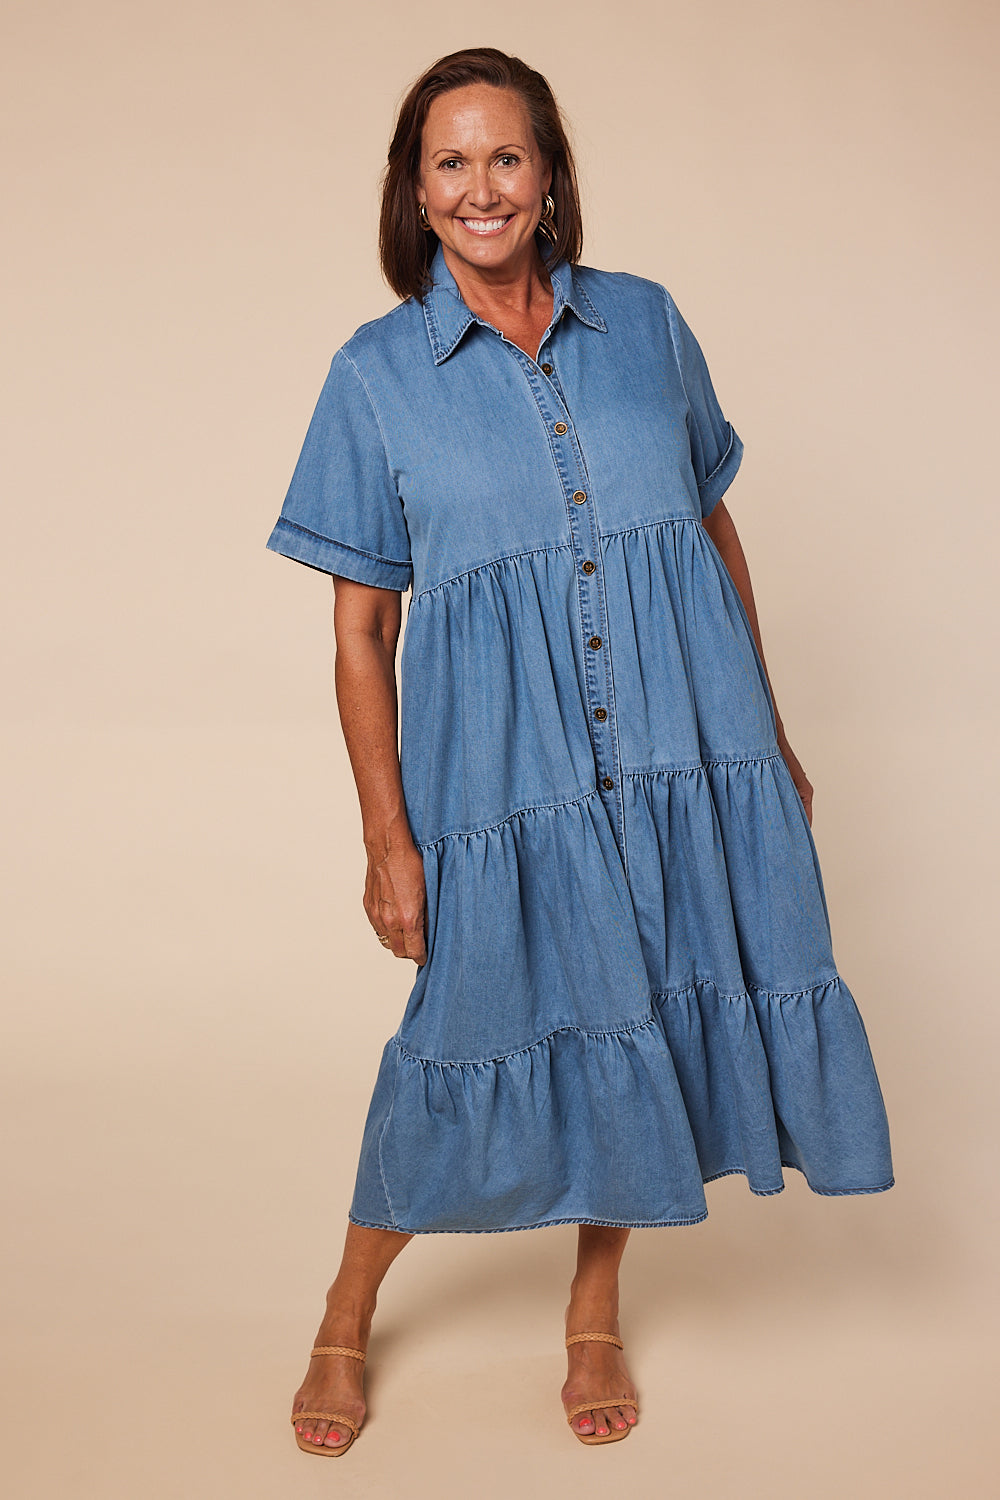 Button Front Ruffle Hem Denim Dress for Sale Australia| New Collection  Online| SHEIN Australia